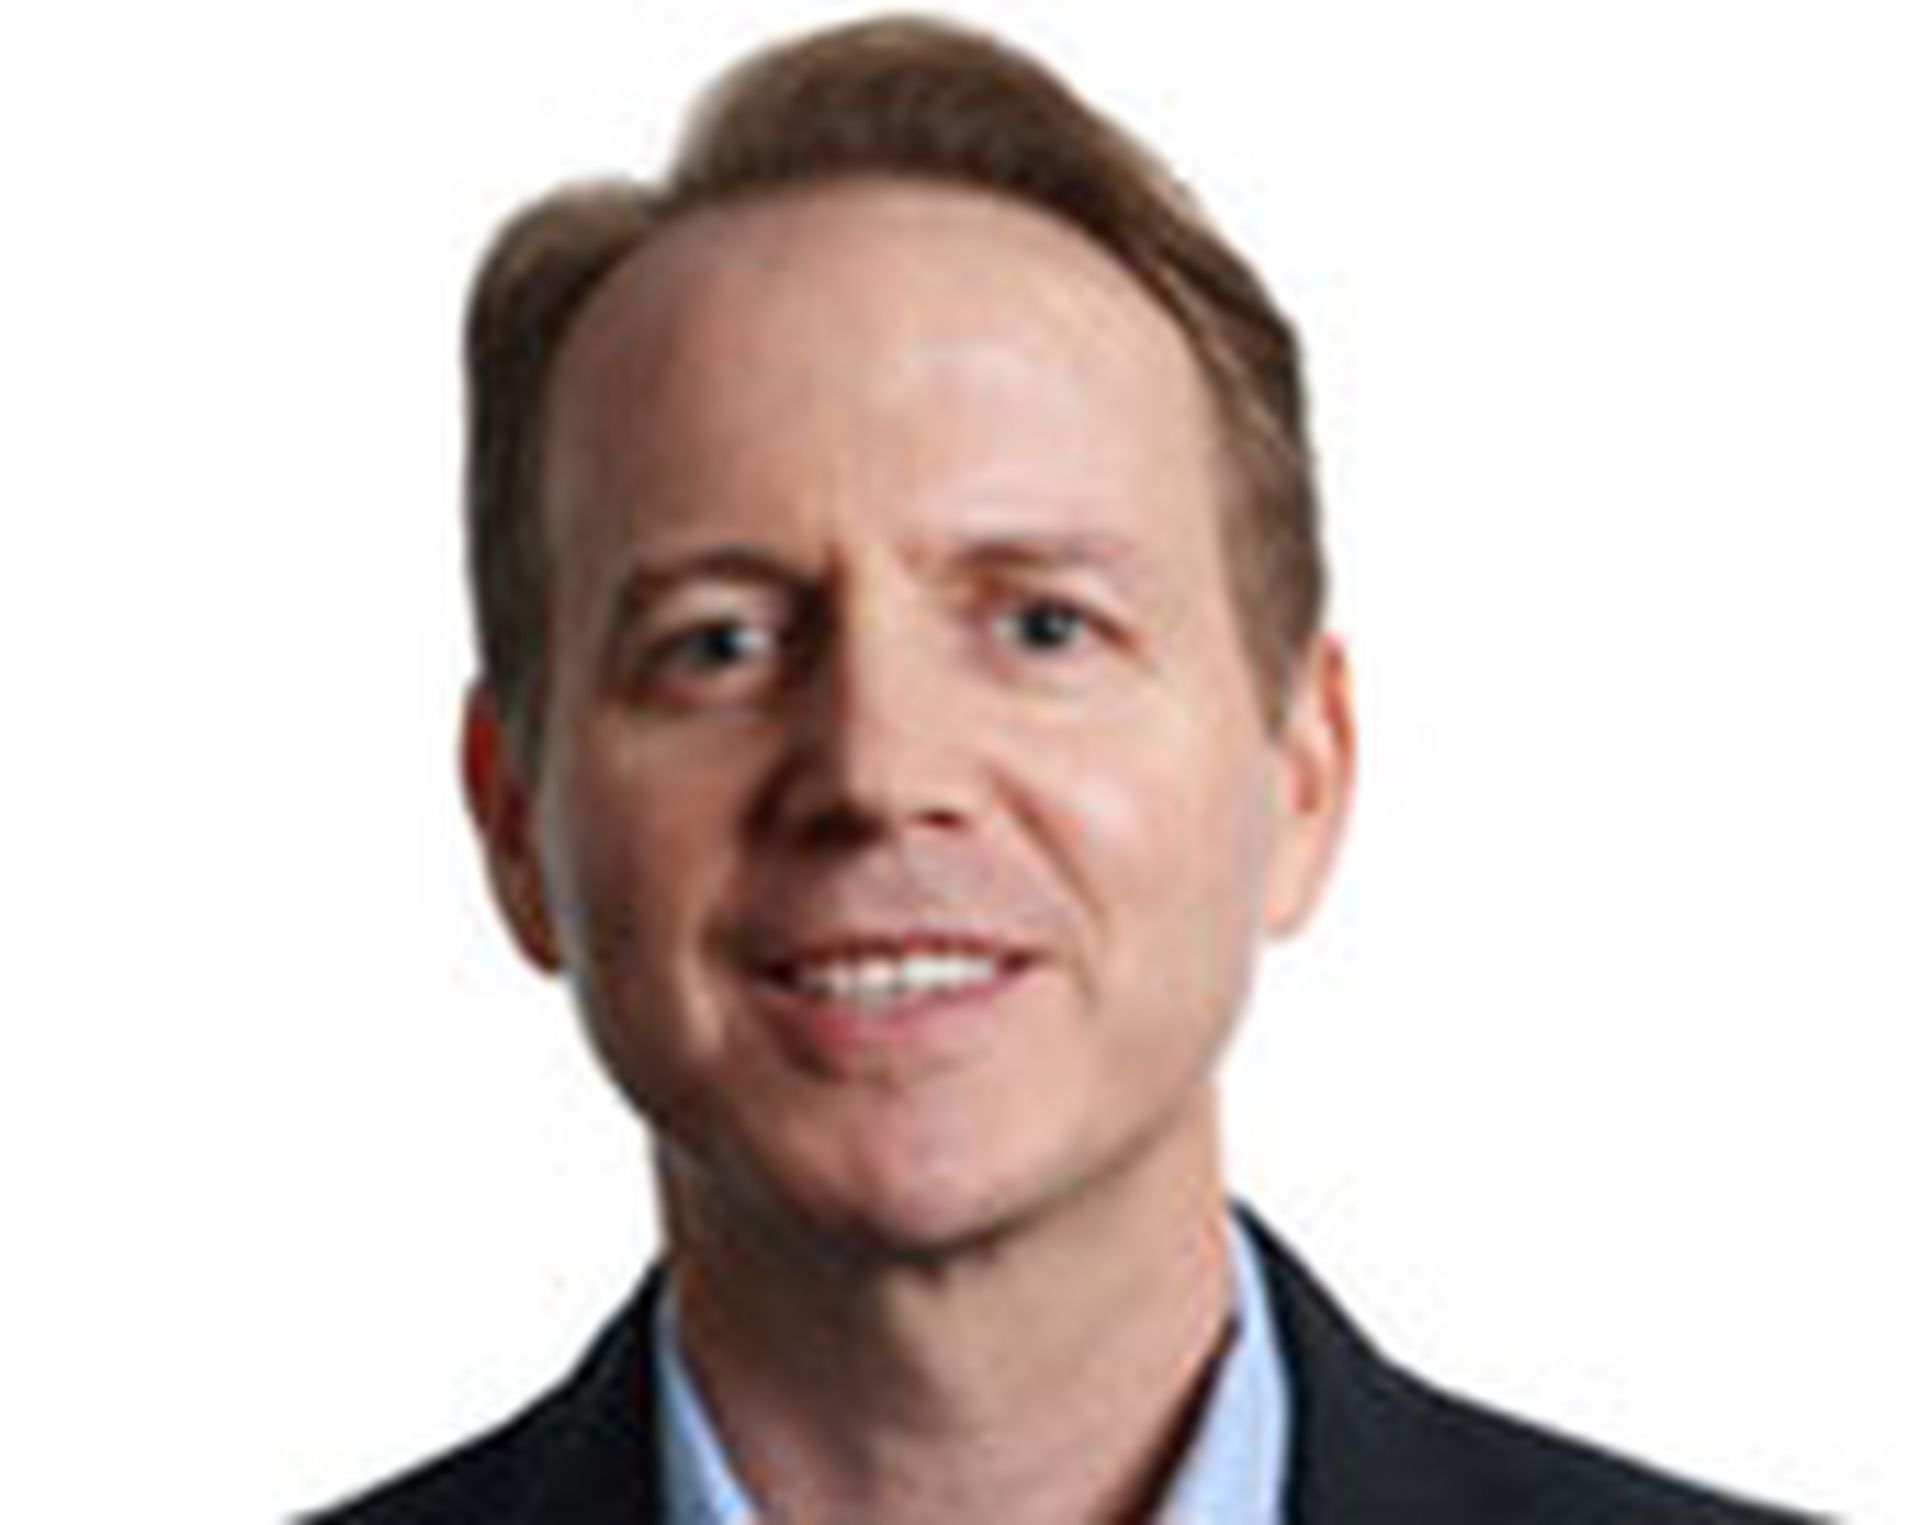 Citrix CEO David J. Henshall